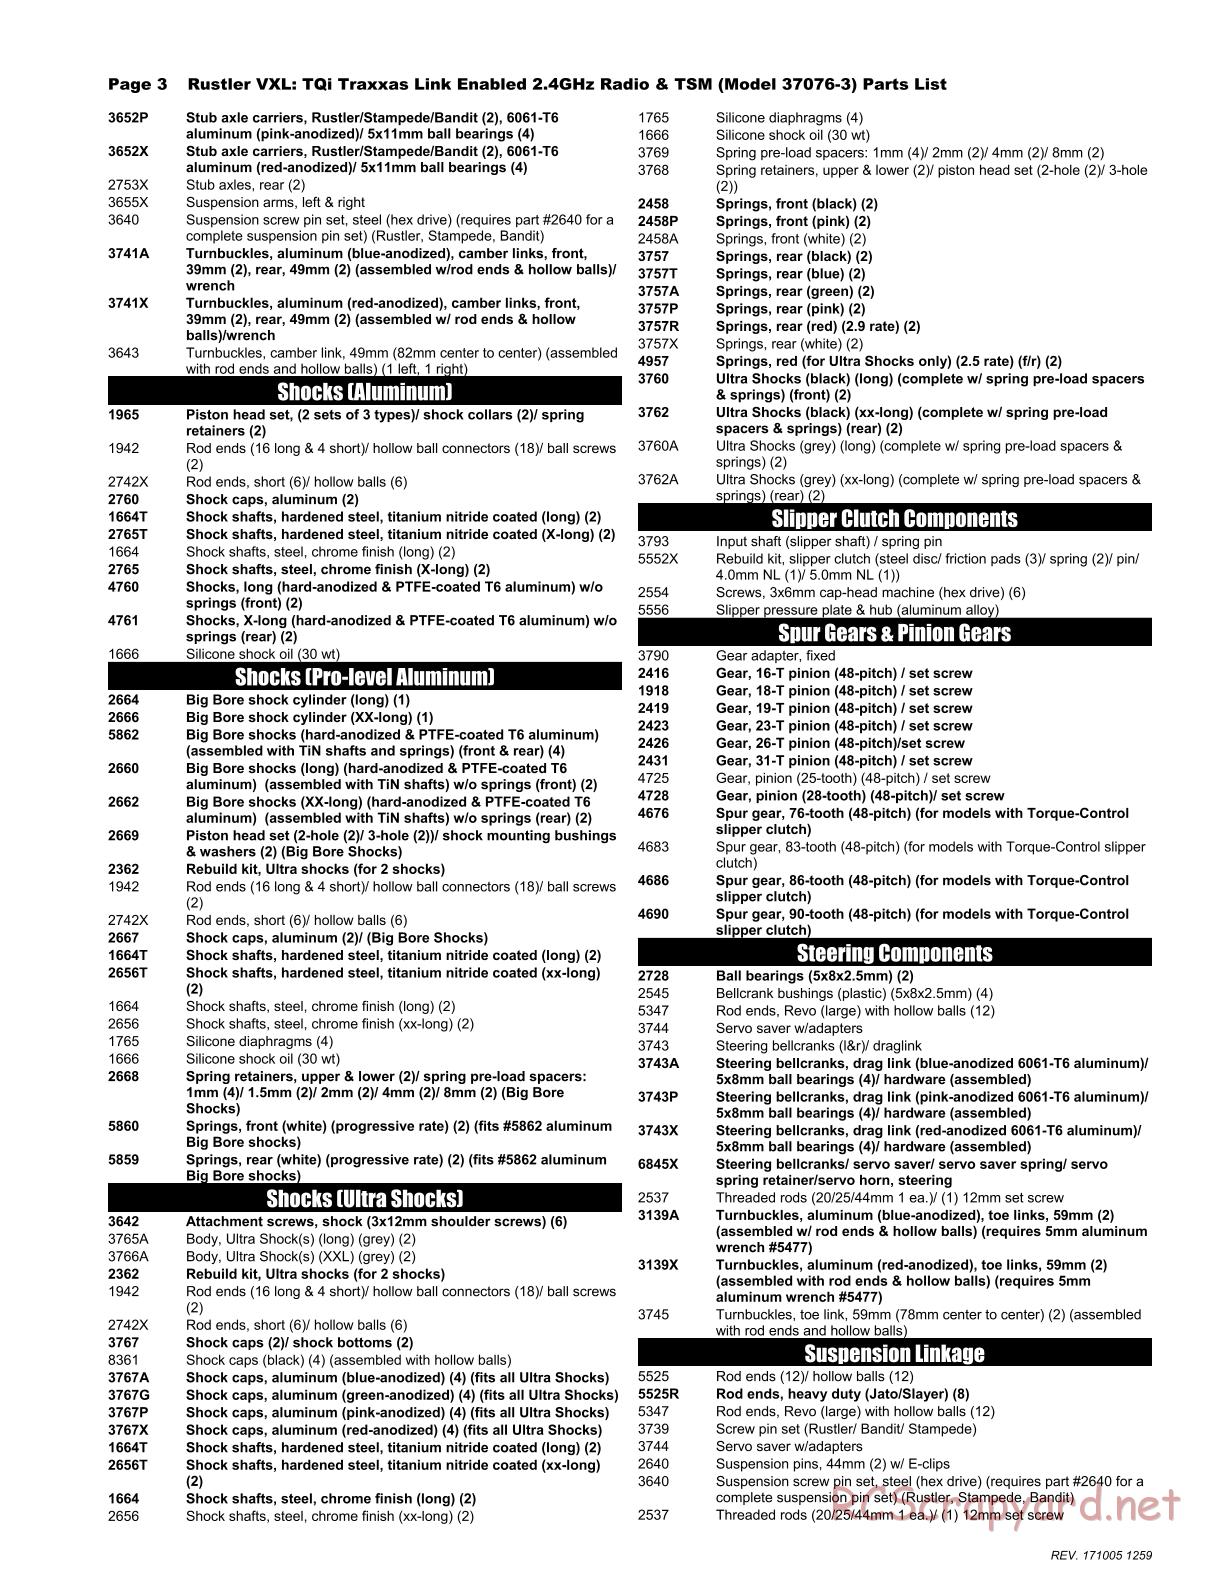 Traxxas - Rustler VXL TSM (2015) - Parts List - Page 3